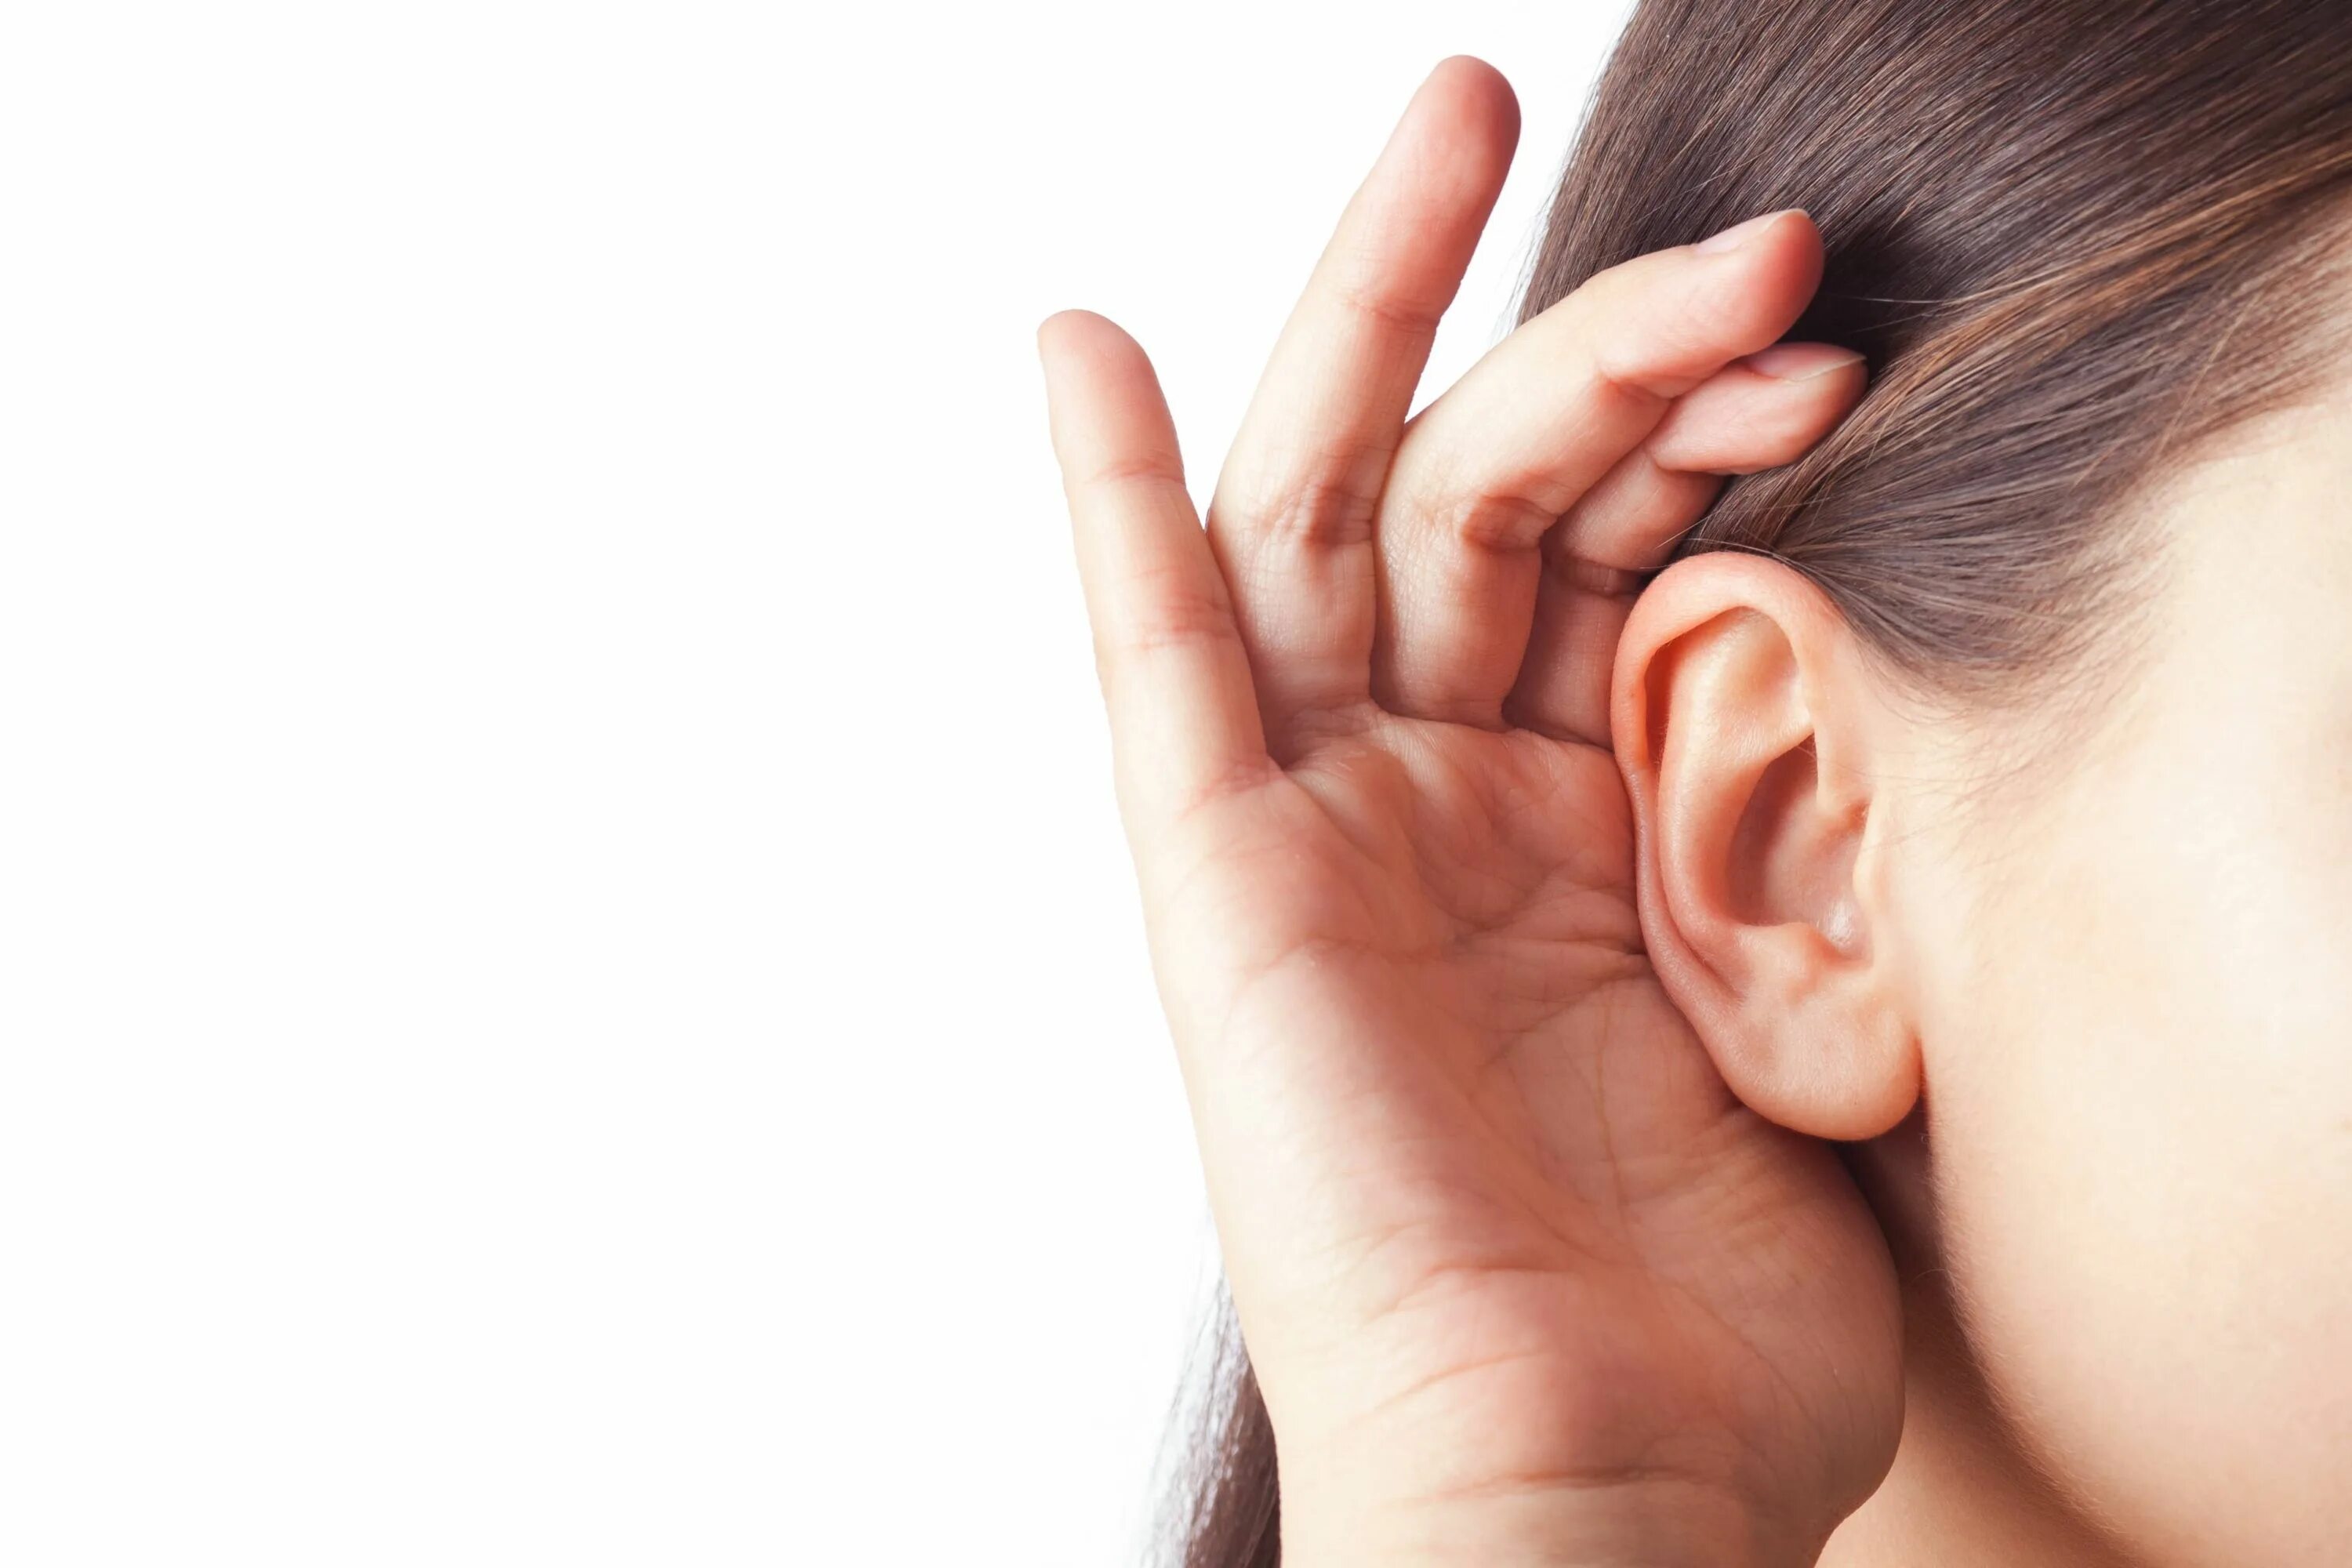 The hearing over. Профилактика слуха. Гигиена слуха. Хороший слух.